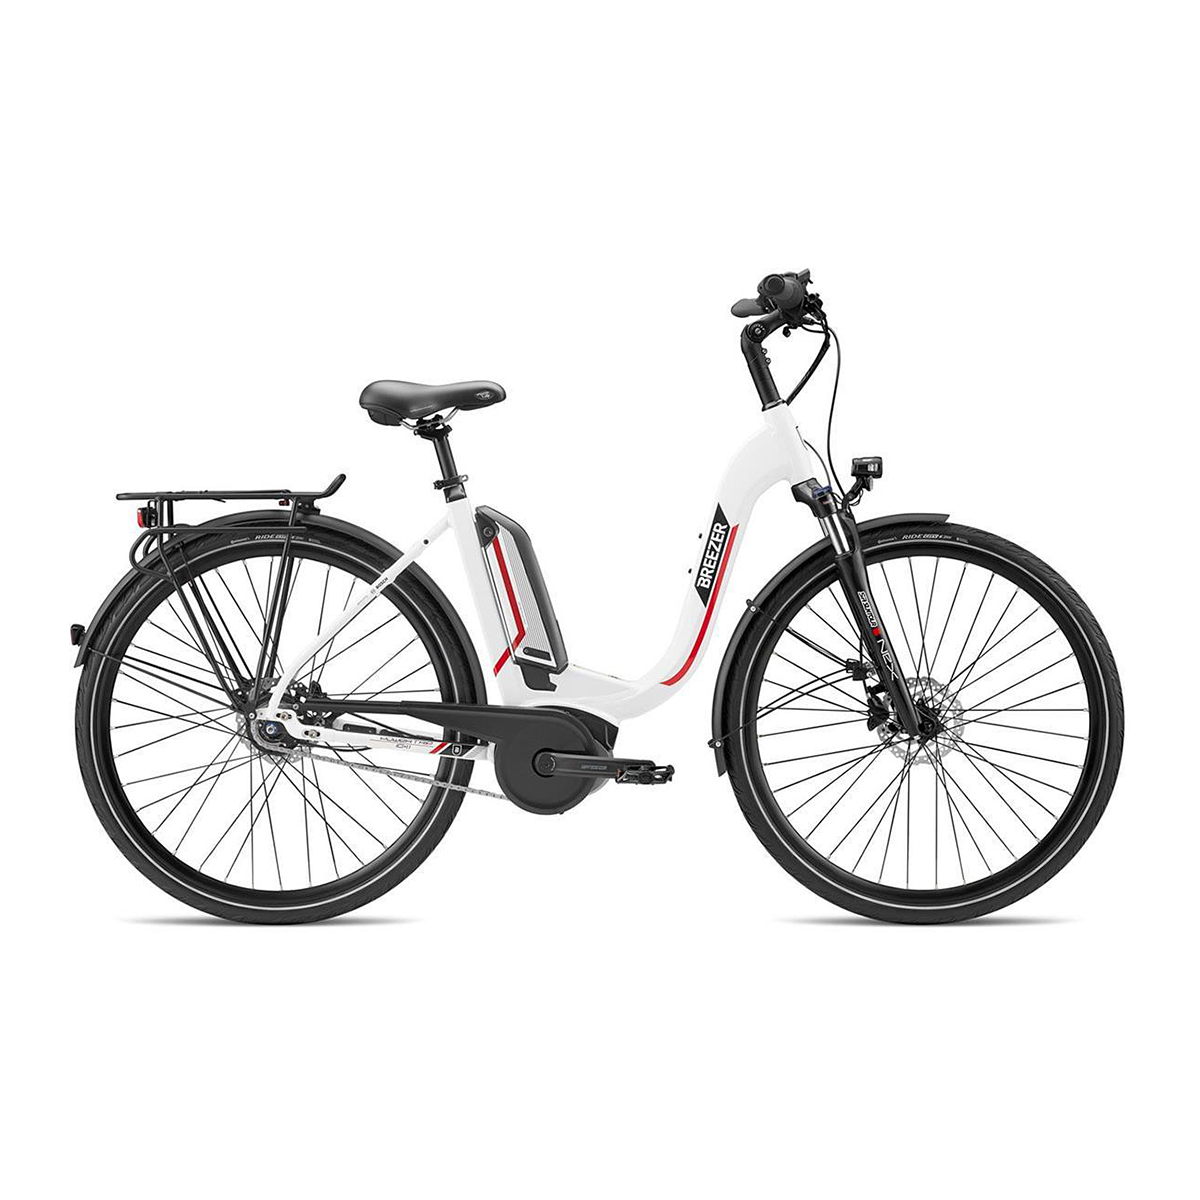 Bicikl Powertrip 1.1 Ig+ Ls 2020 | BikerShop